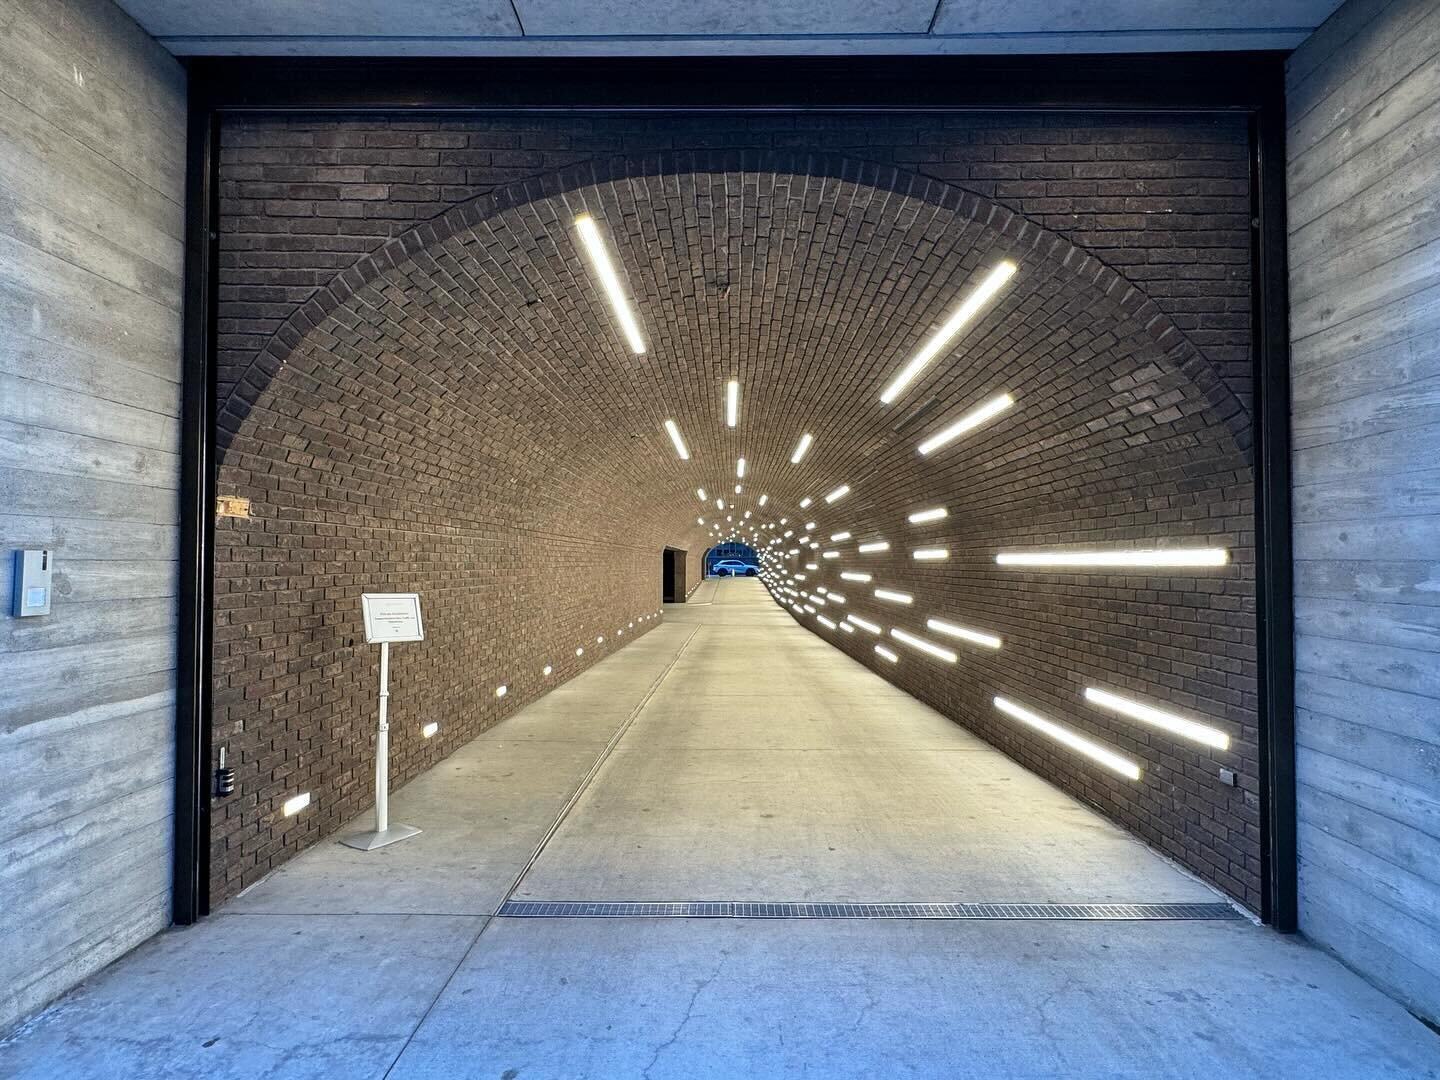 #newyorkcity apartment complex entry way by #stanleykubrick 

#newyork #architecture #newyorkcityarchitecture